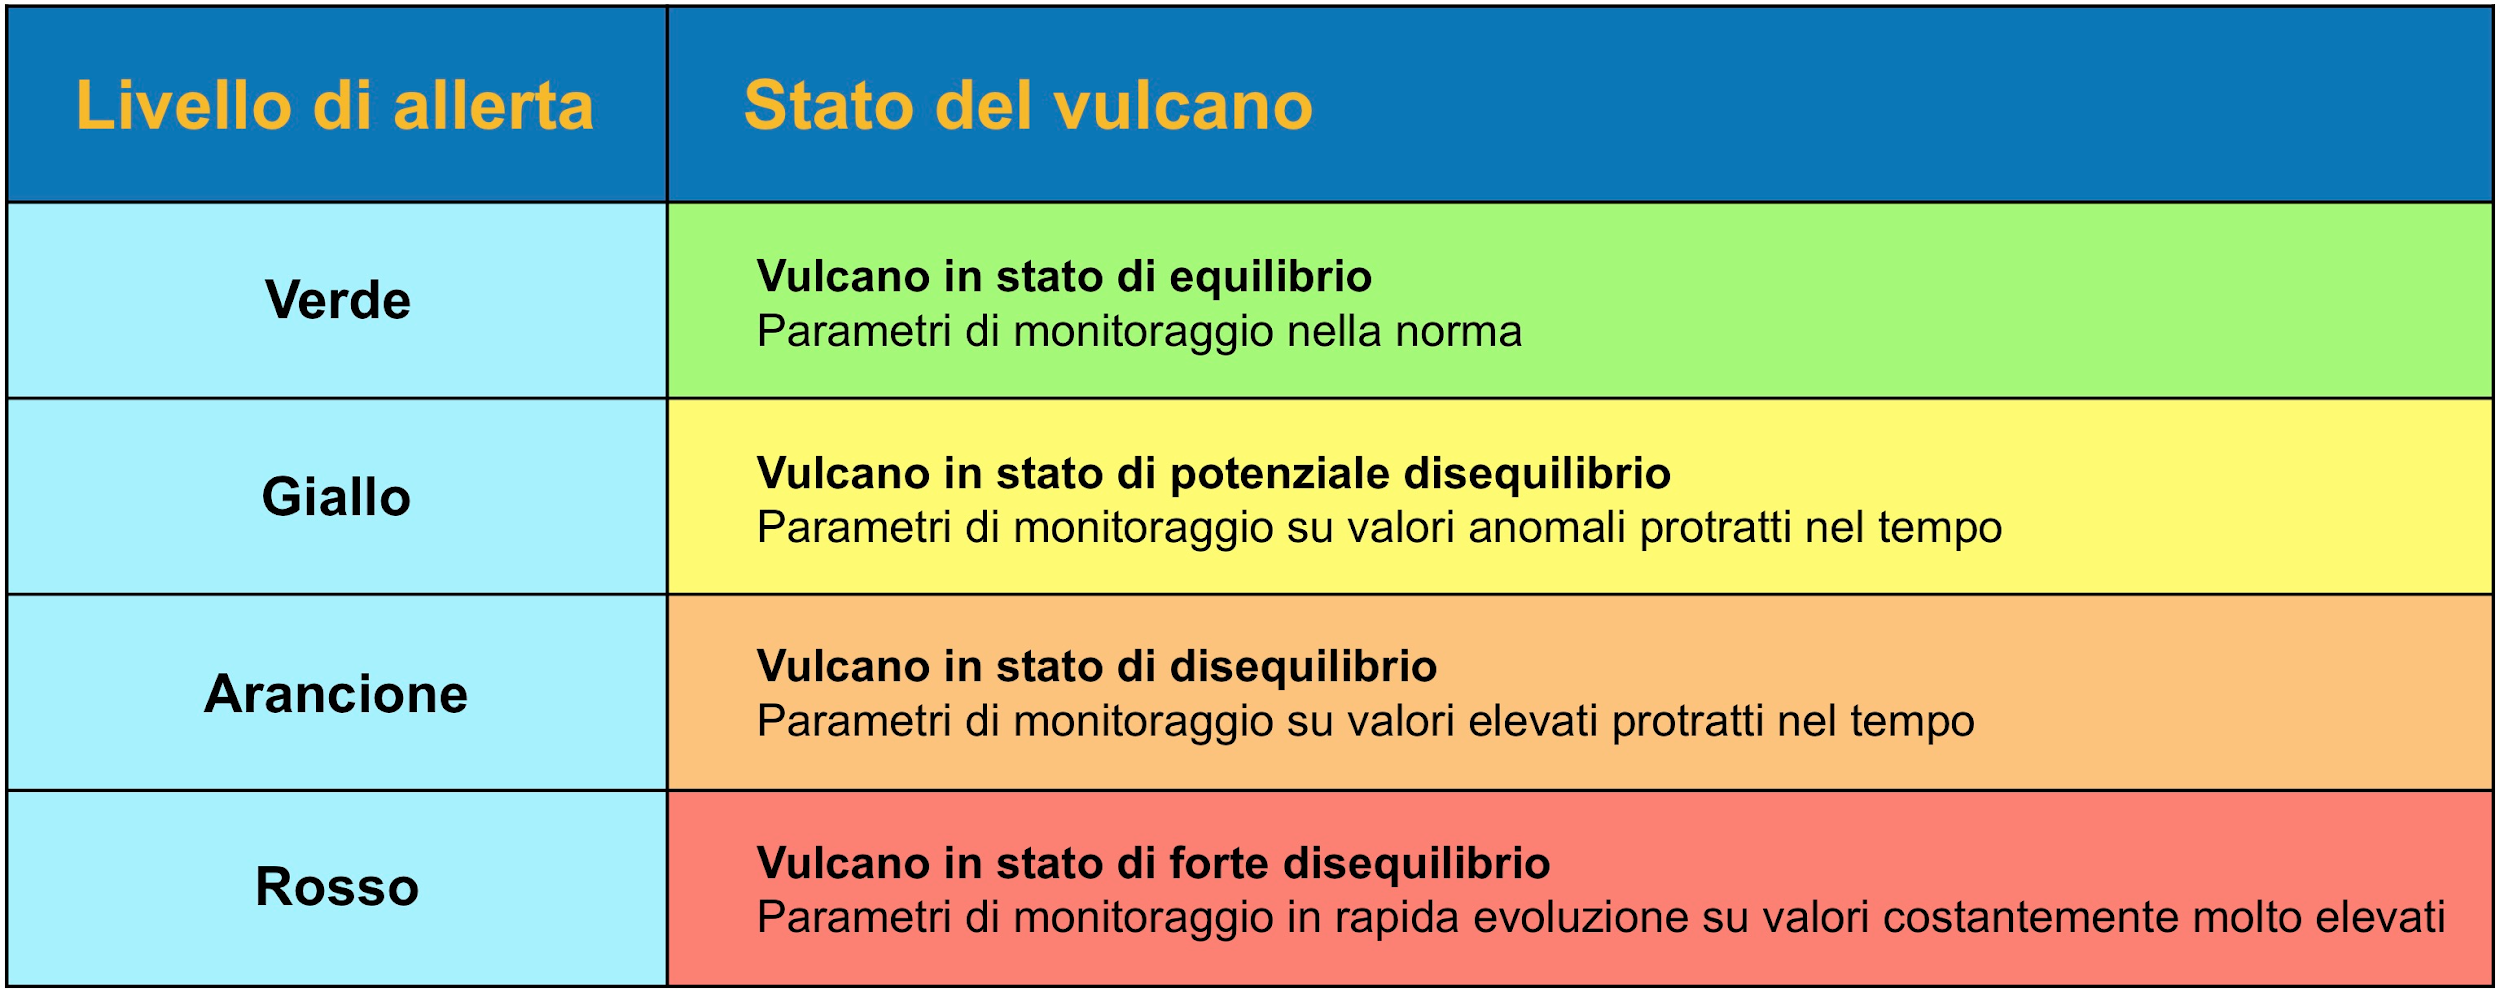 emergenza vulcani2